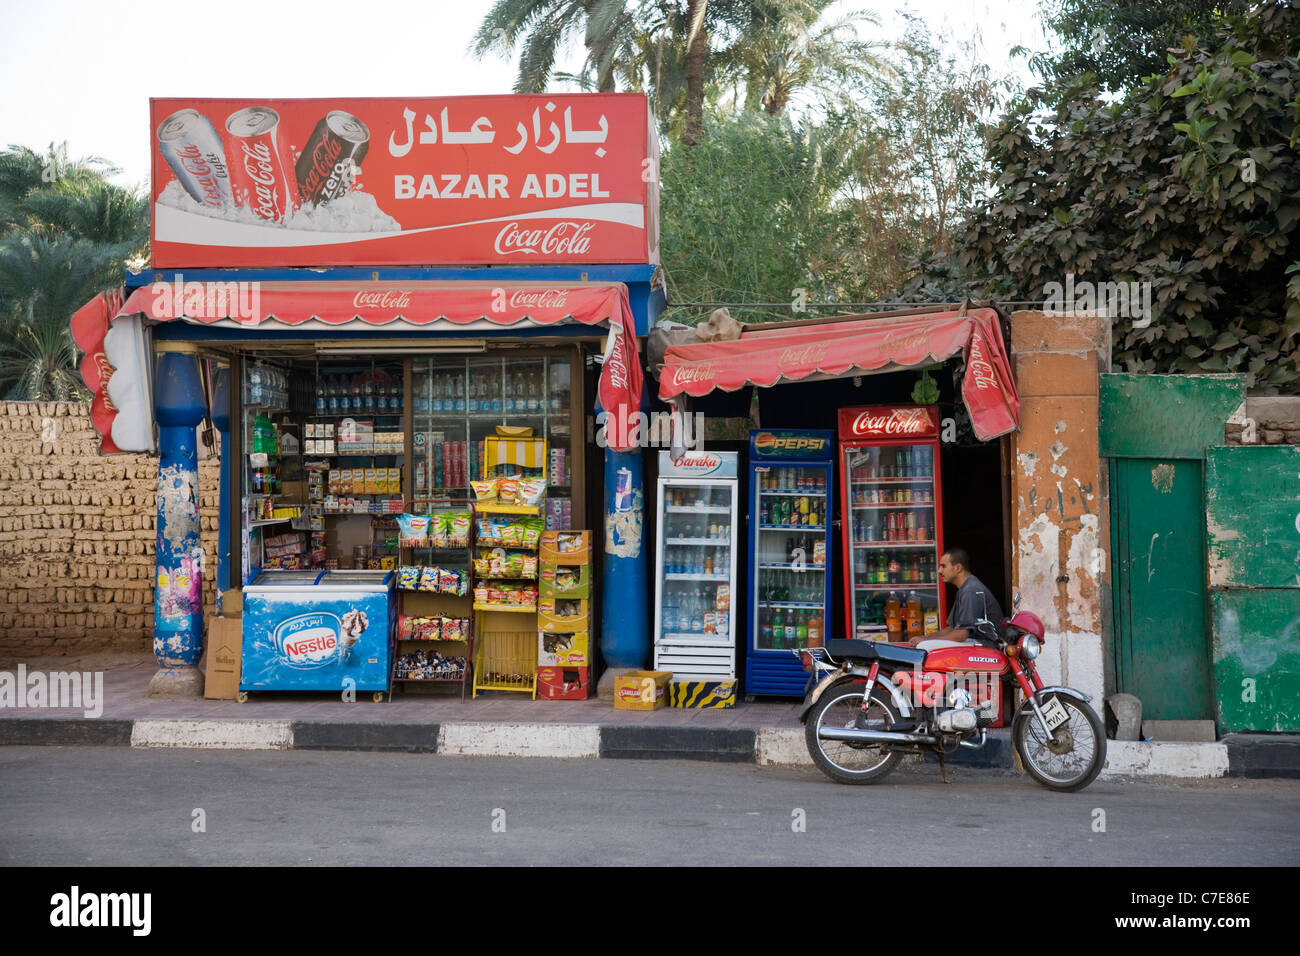 Street bazar Adel, Luxor, Egypt Stock Photo